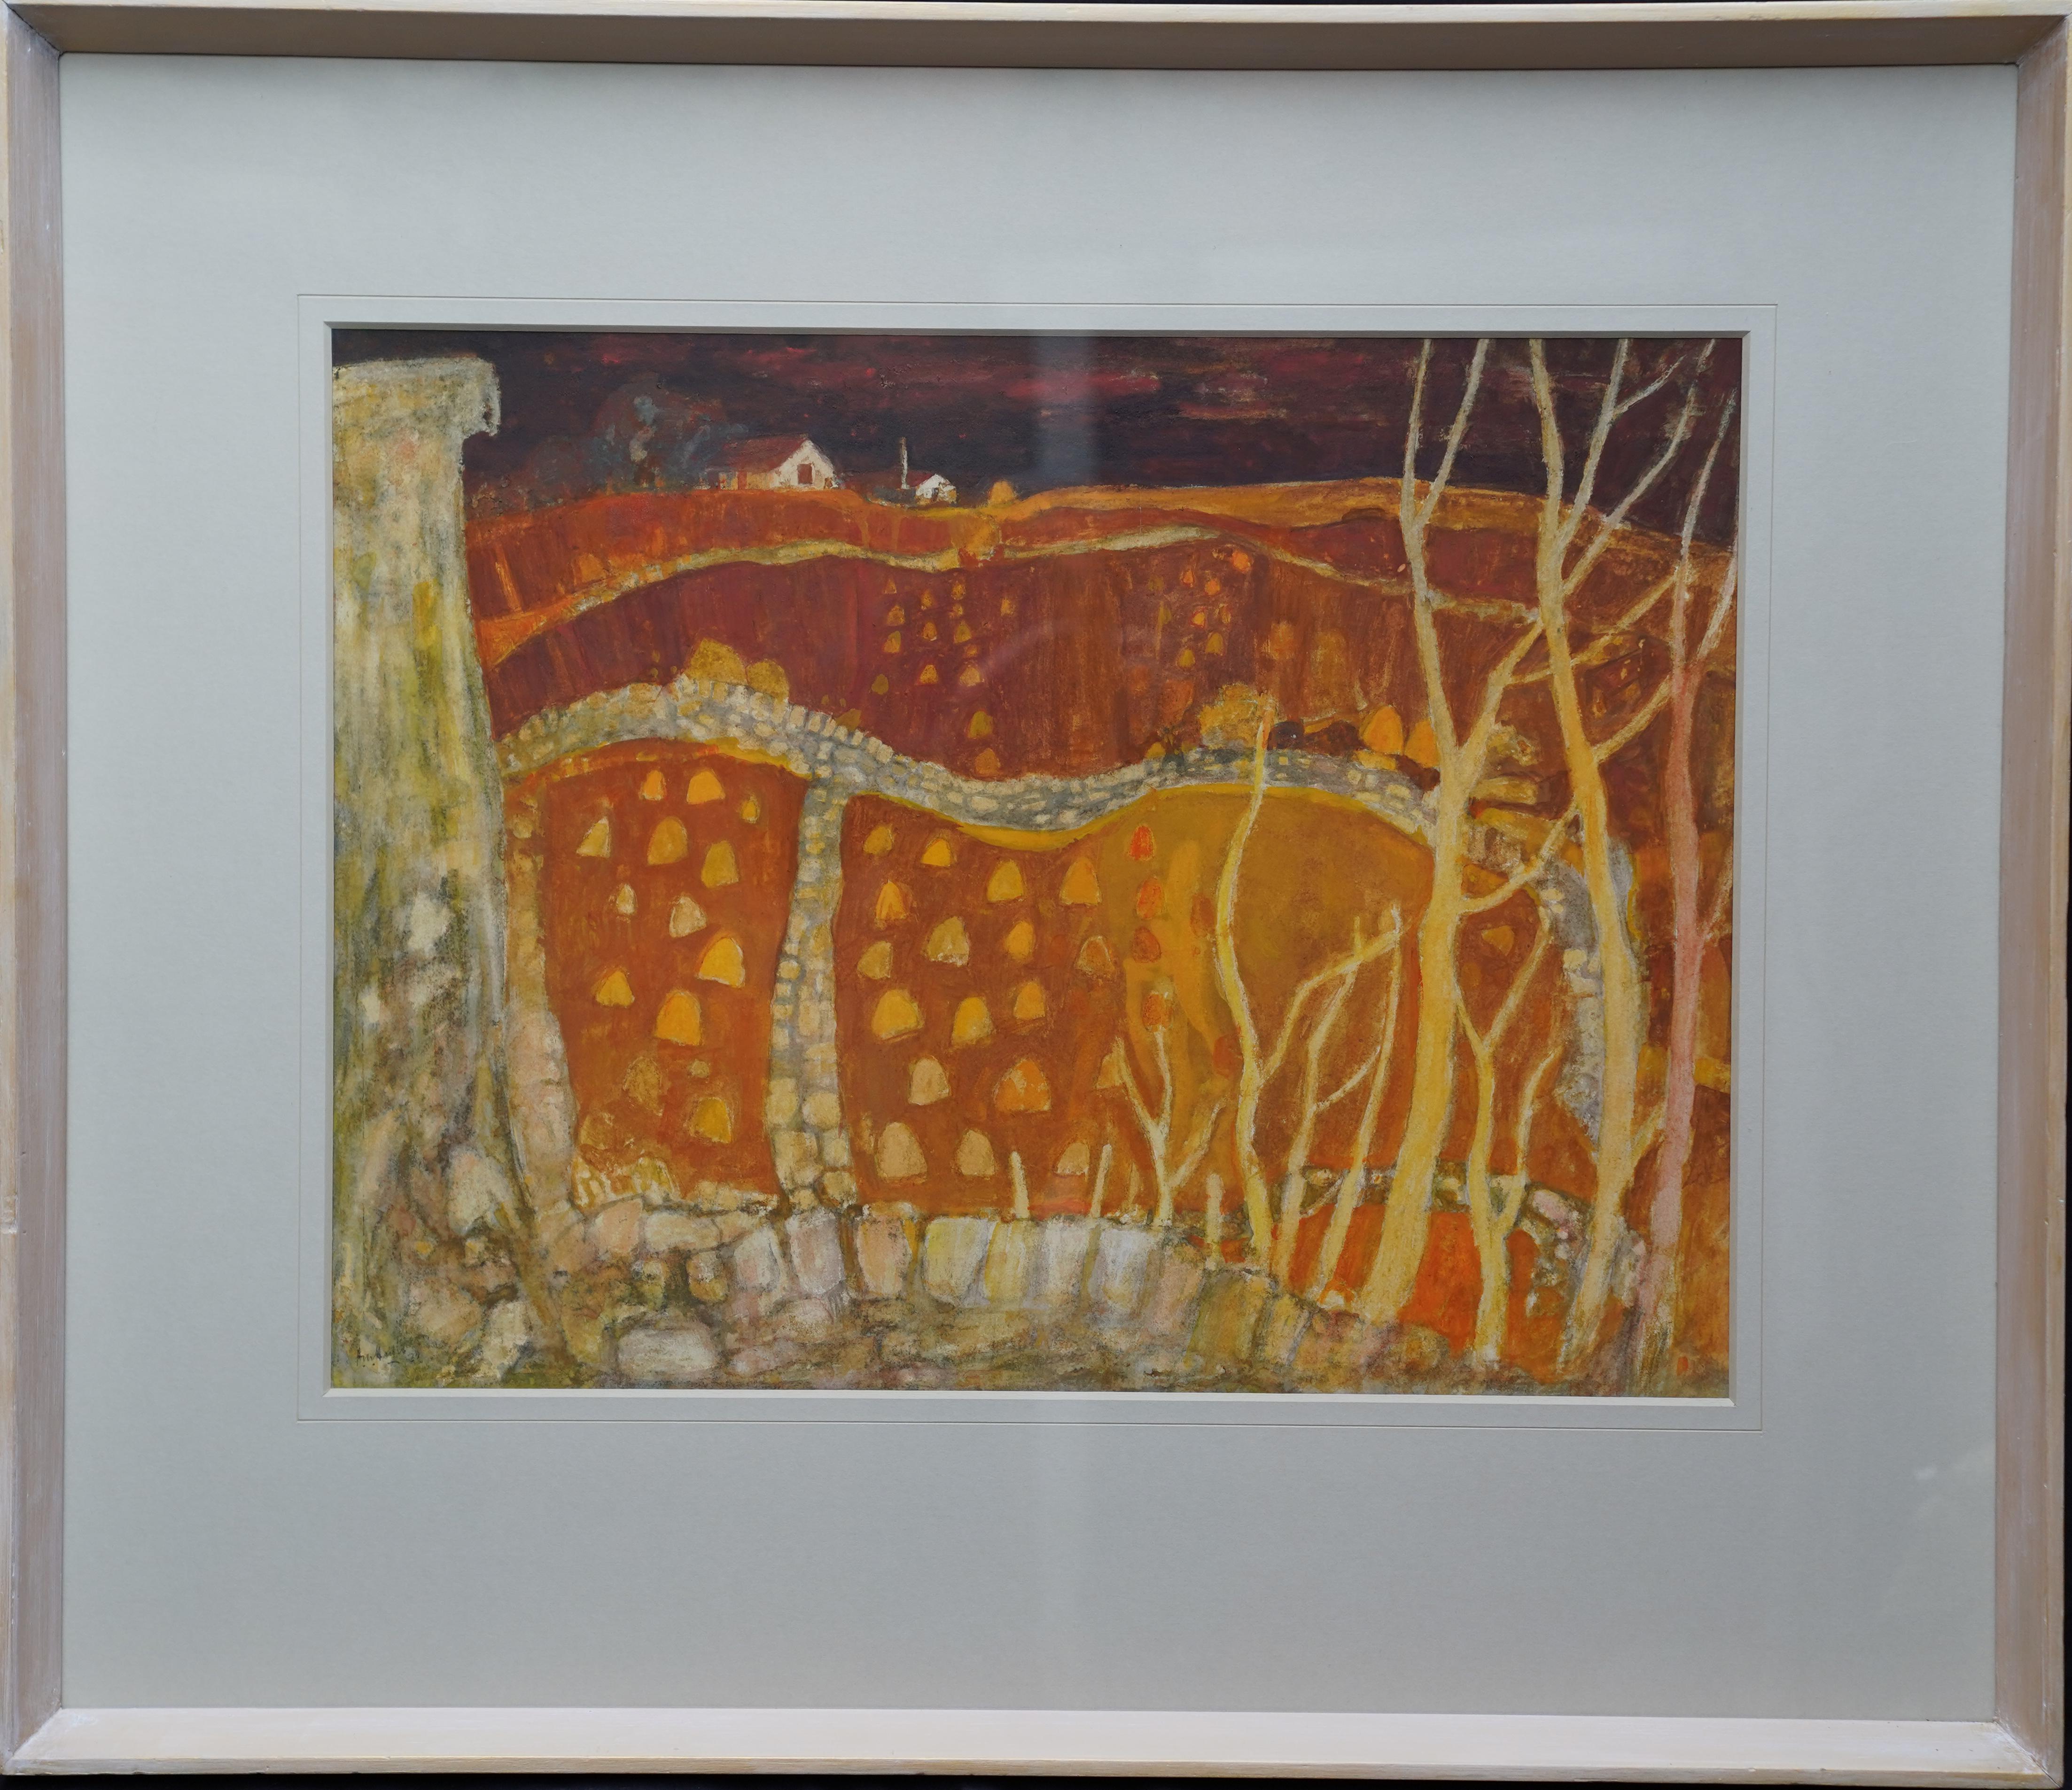 View Across Farmland - Scottish 20thC Expressionist art landscape painting gold